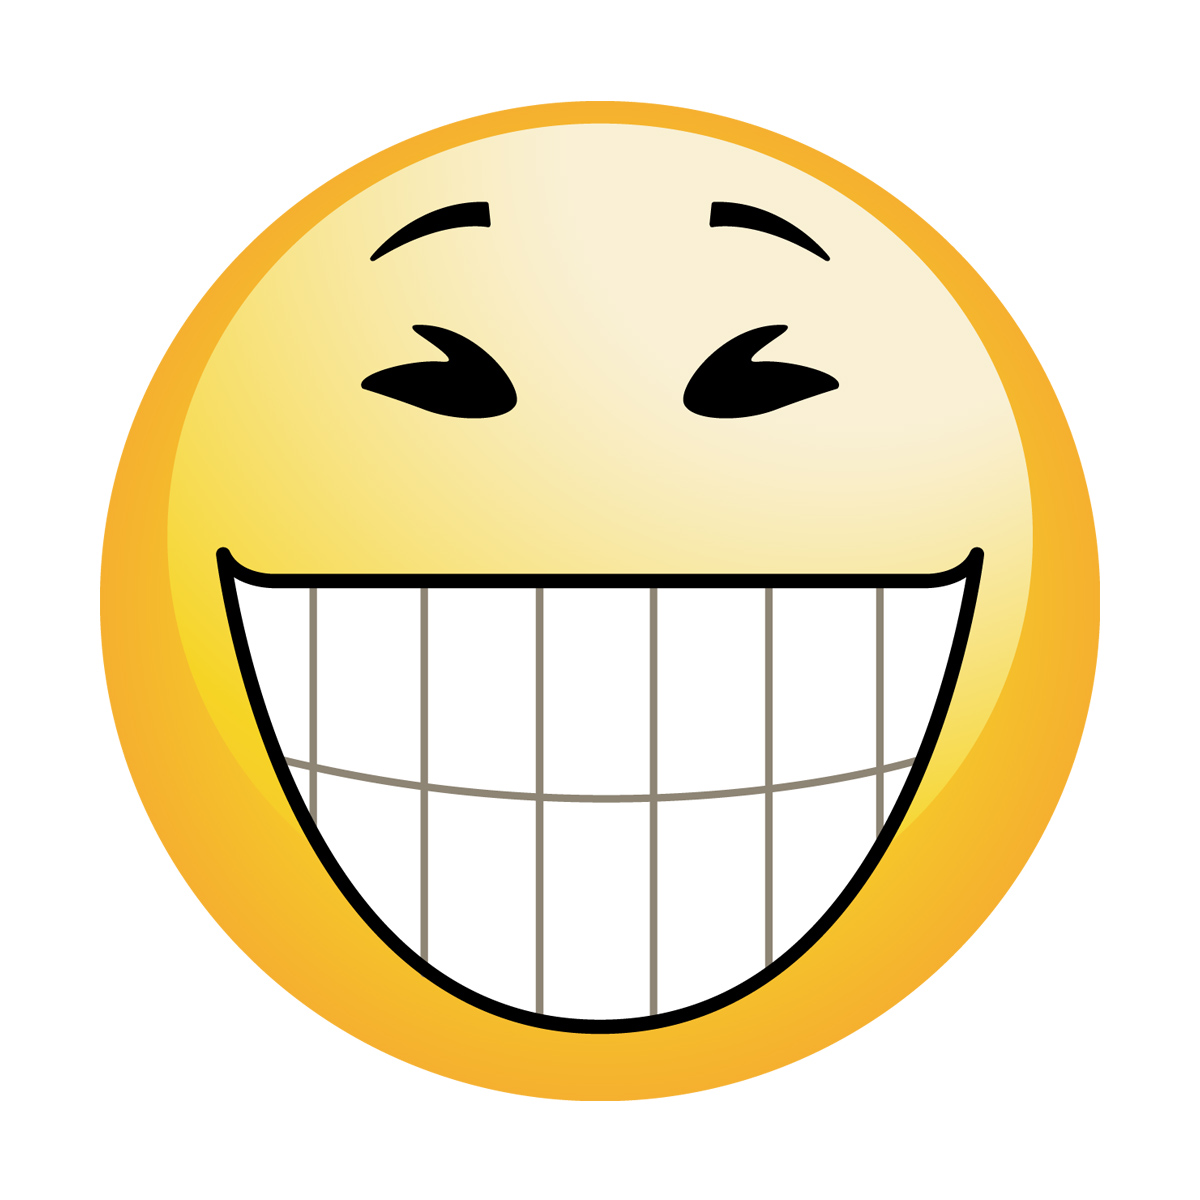 https://www.ambiance-sticker.com/images/Image/sticker-smiley-grand-sourire-ambiance-sticker-col-smile_bigSmile.jpg